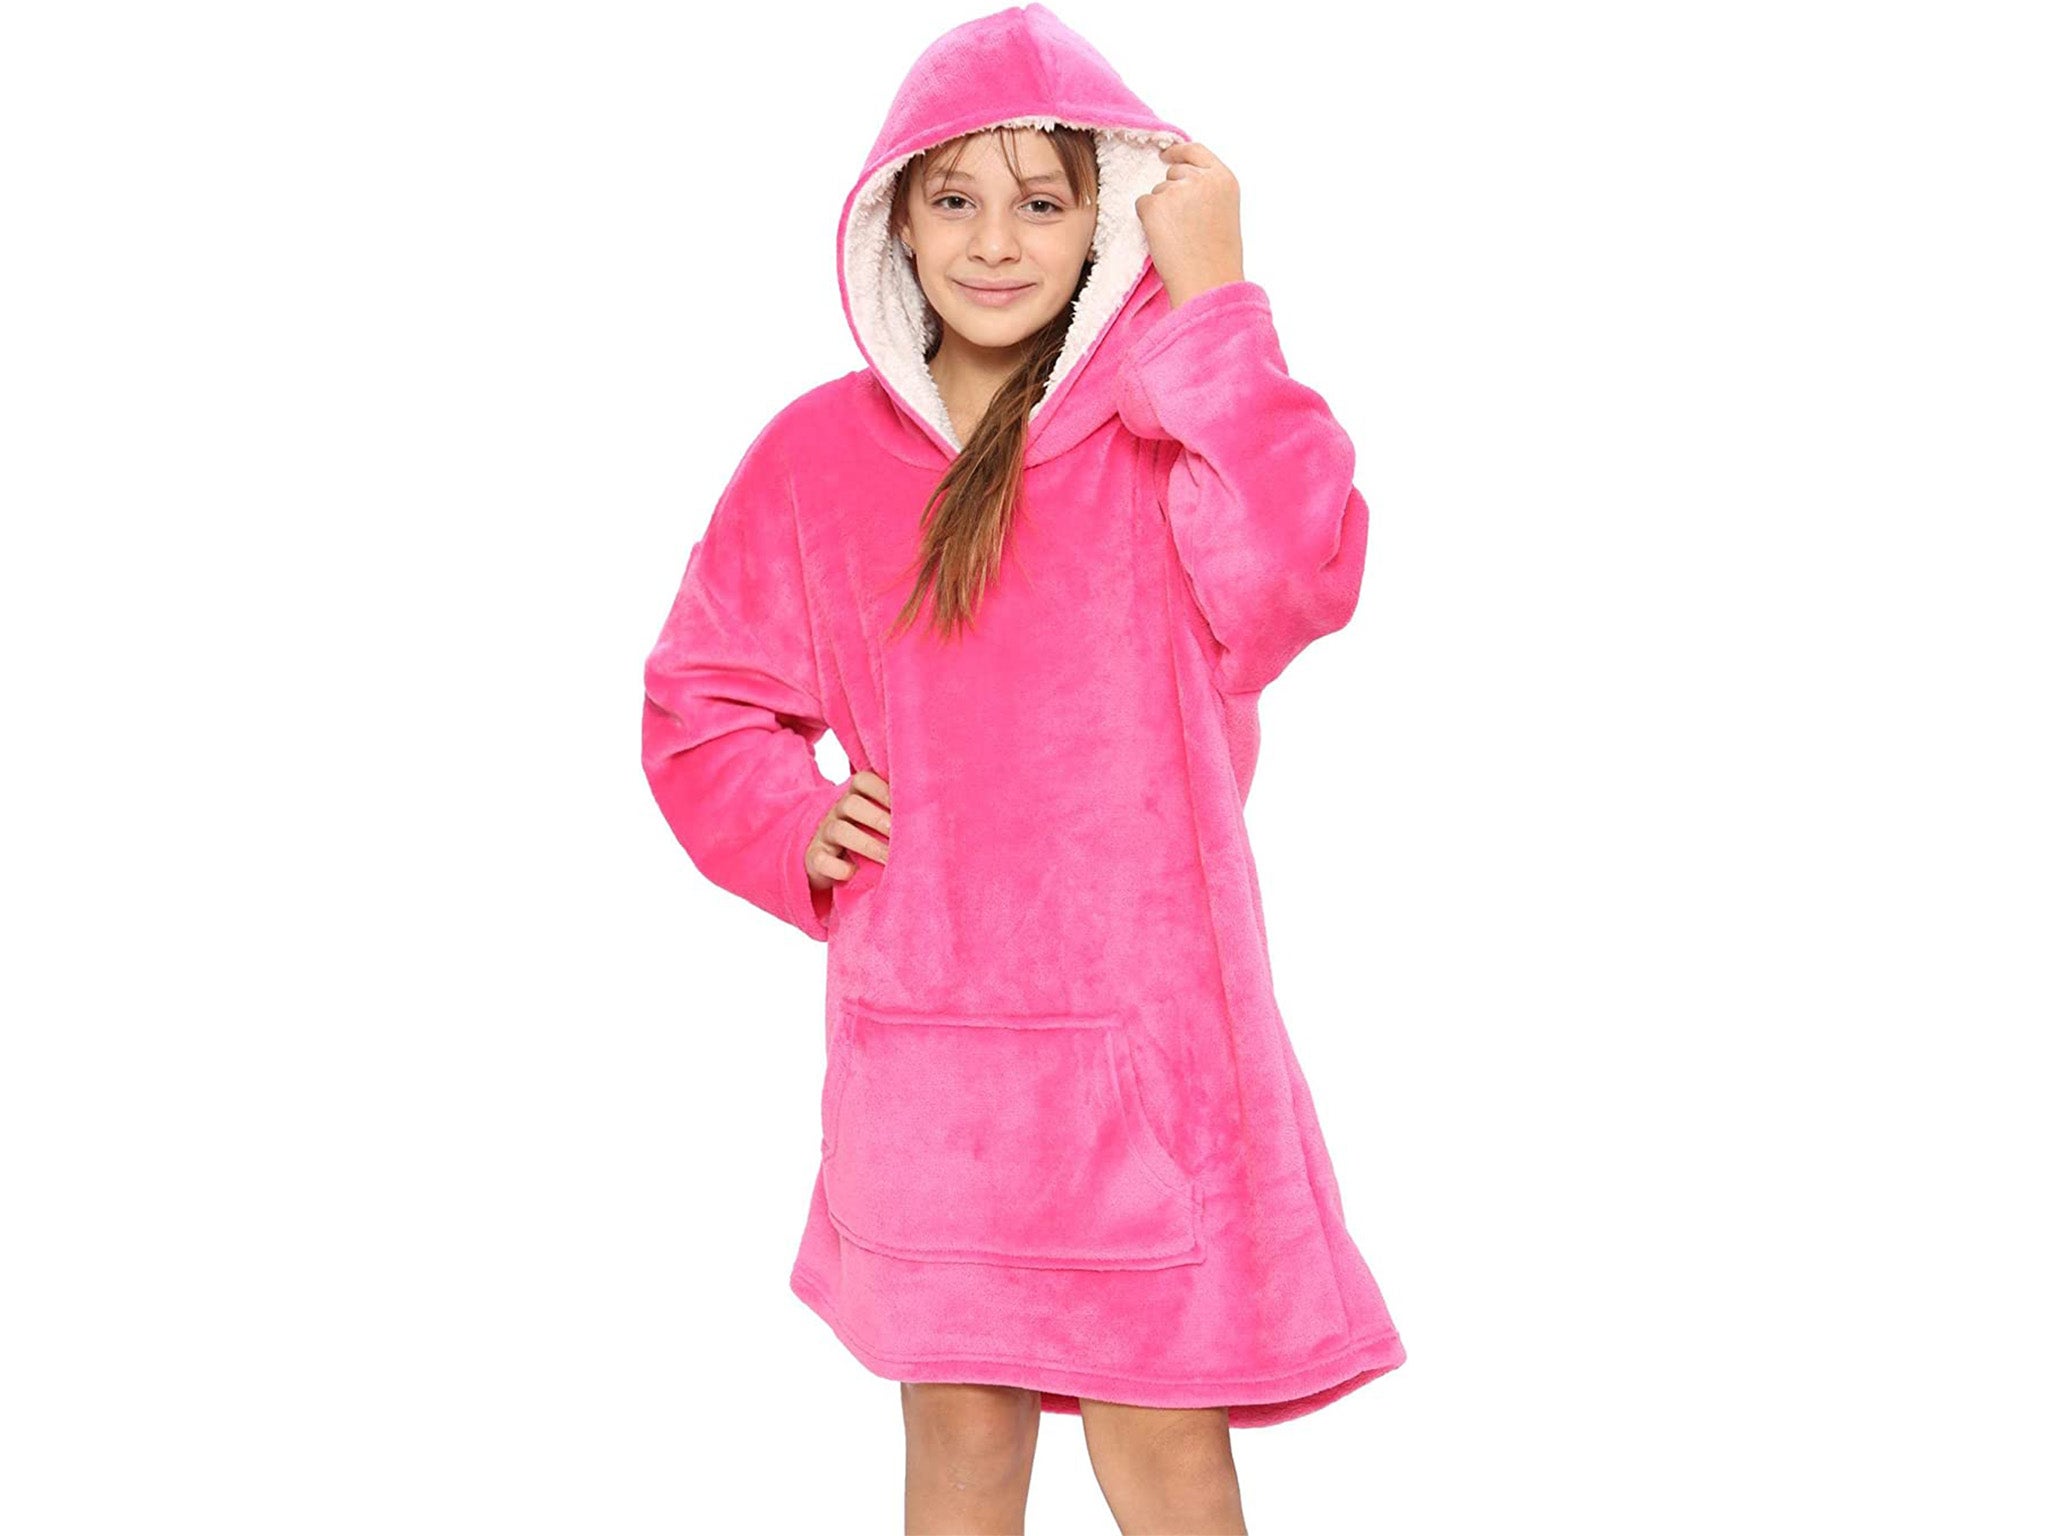 A2Z 4 Kids oversized pink blanket hoodie